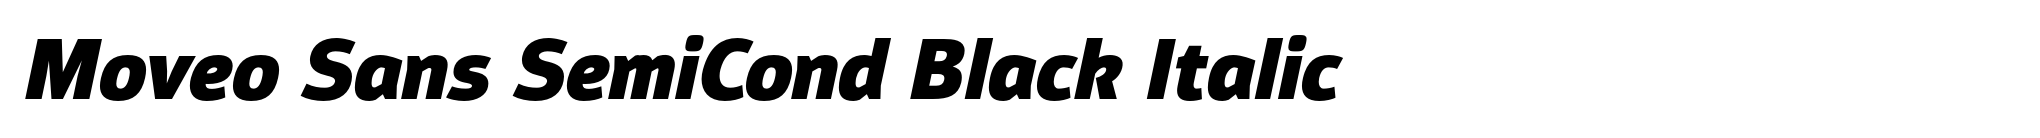 Moveo Sans SemiCond Black Italic image